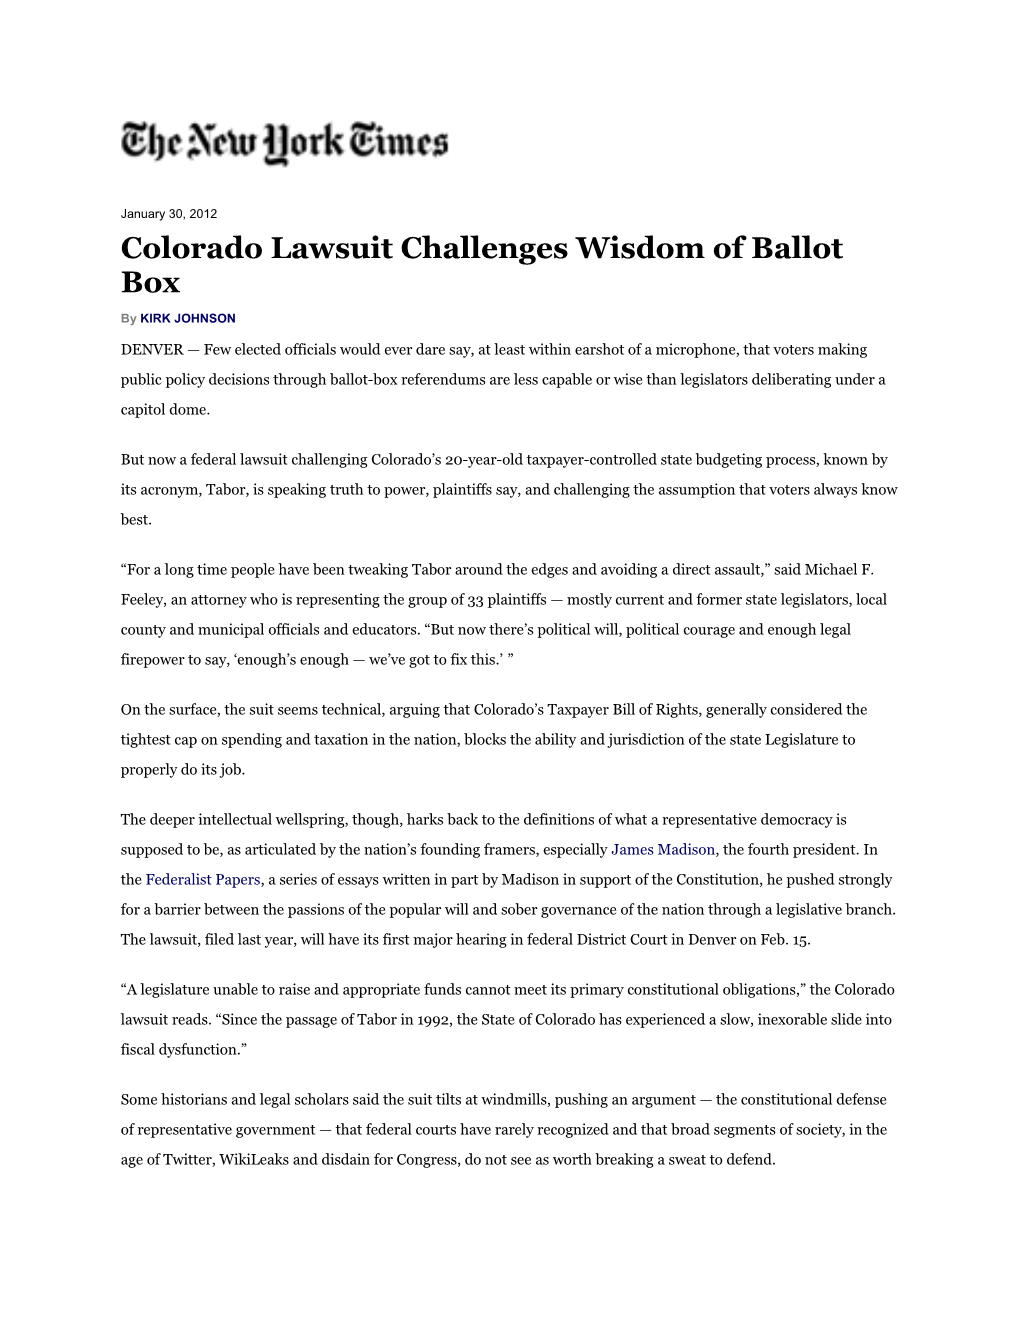 Colorado Lawsuit Challenges Wisdom of Ballot Box